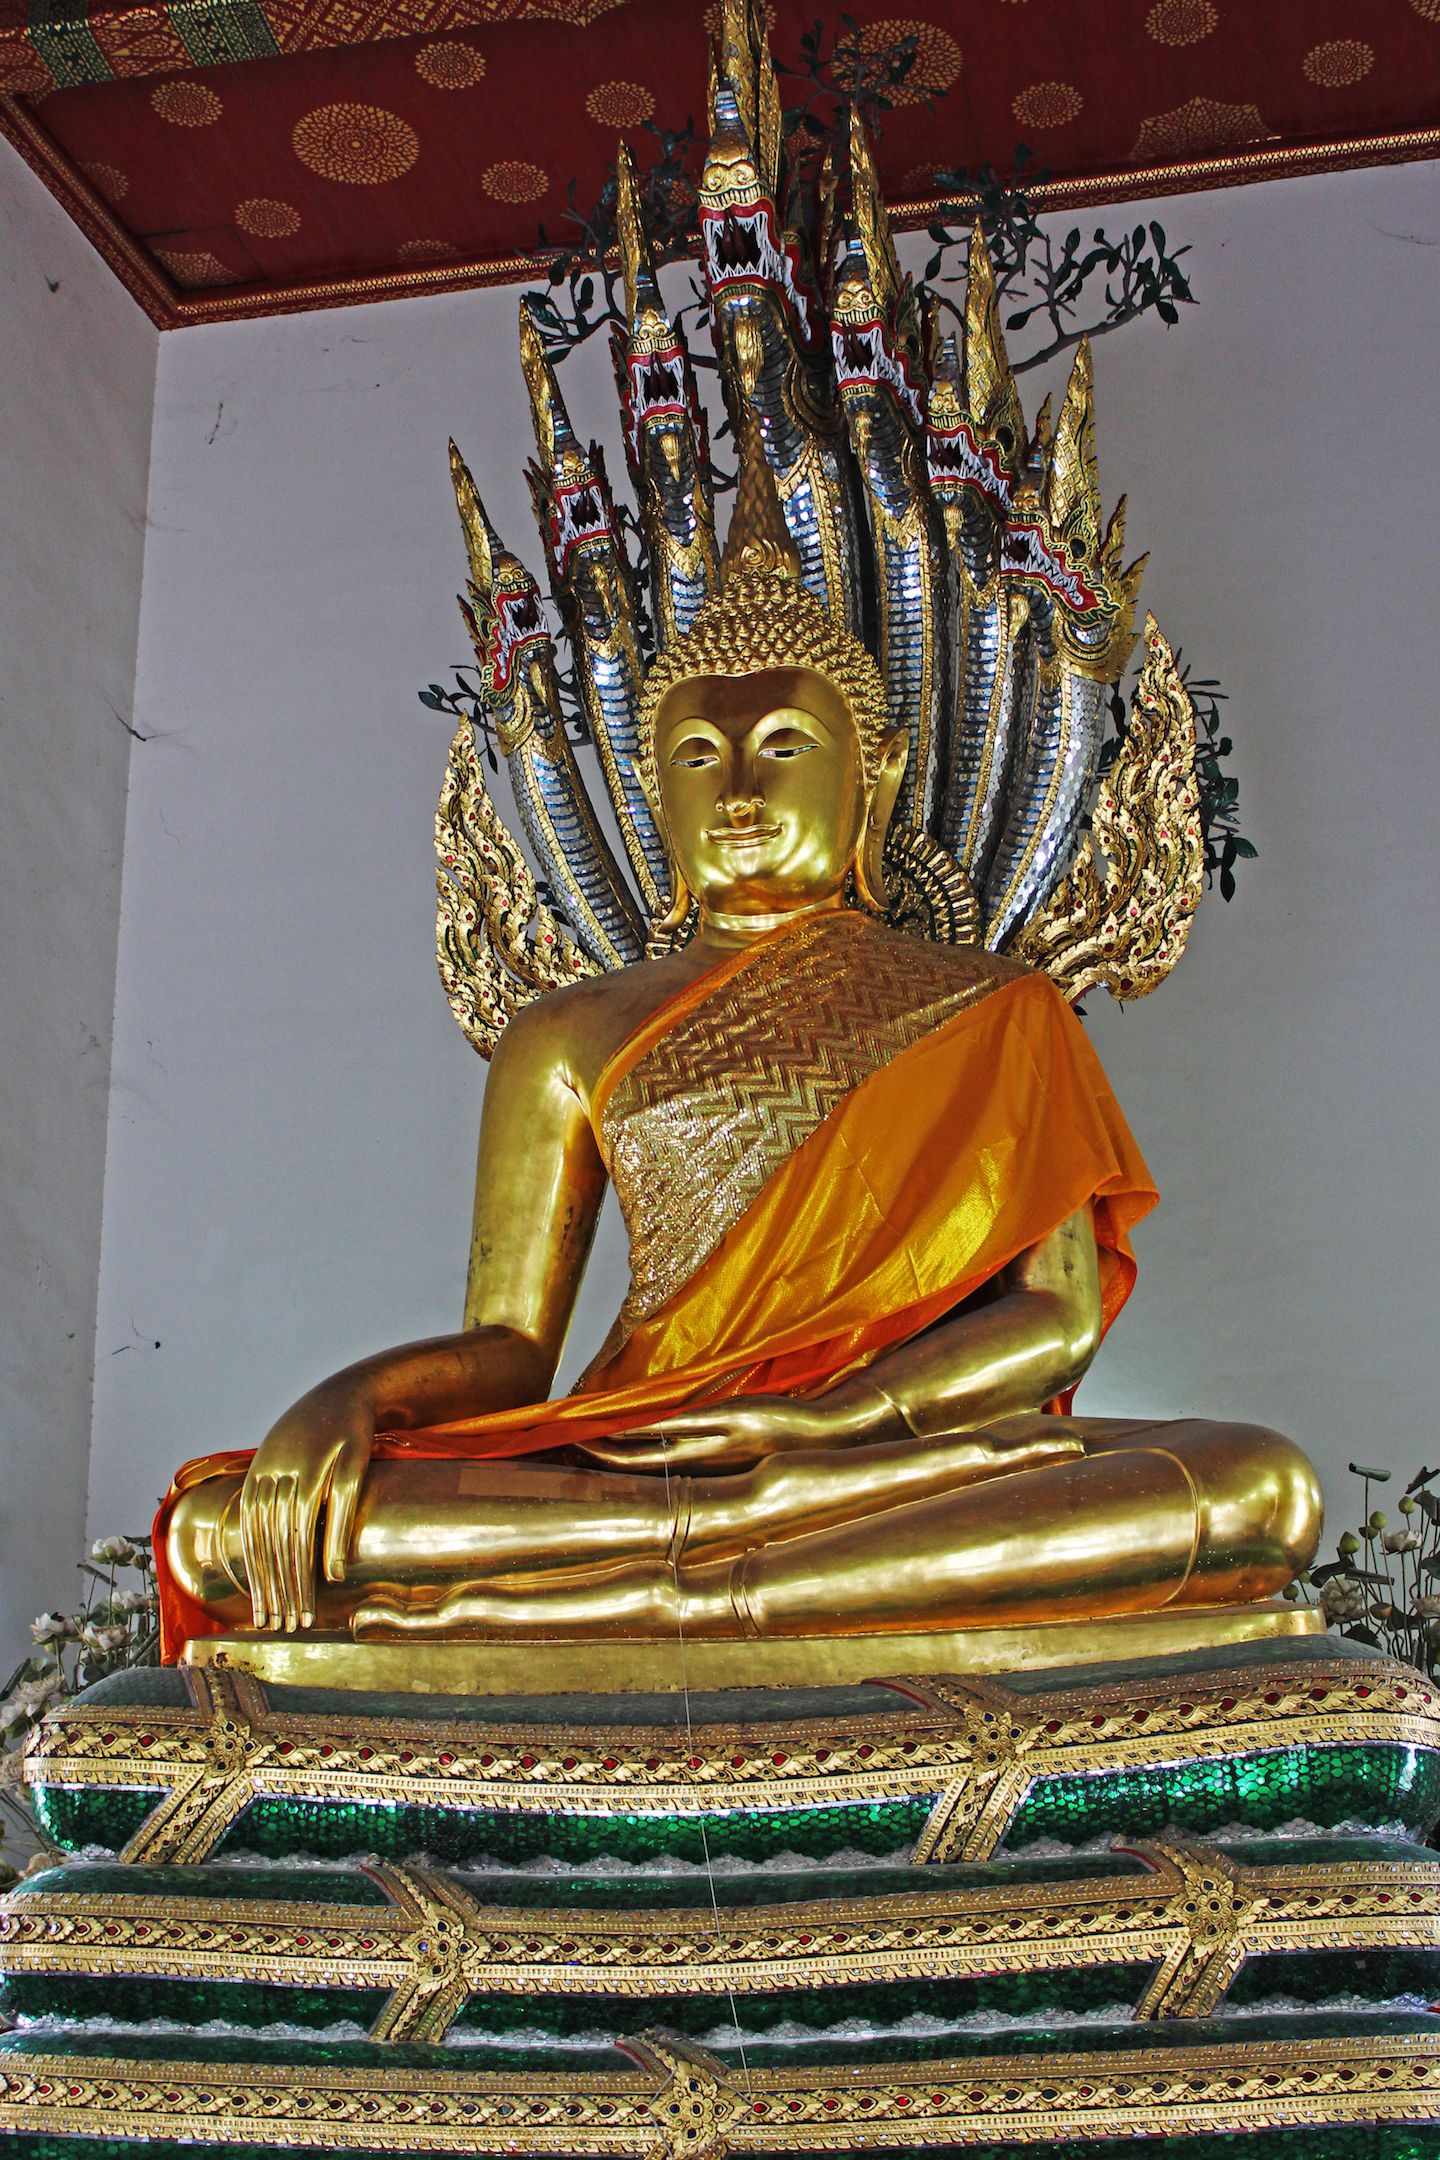 Buddha sitting on a 7-headed naga